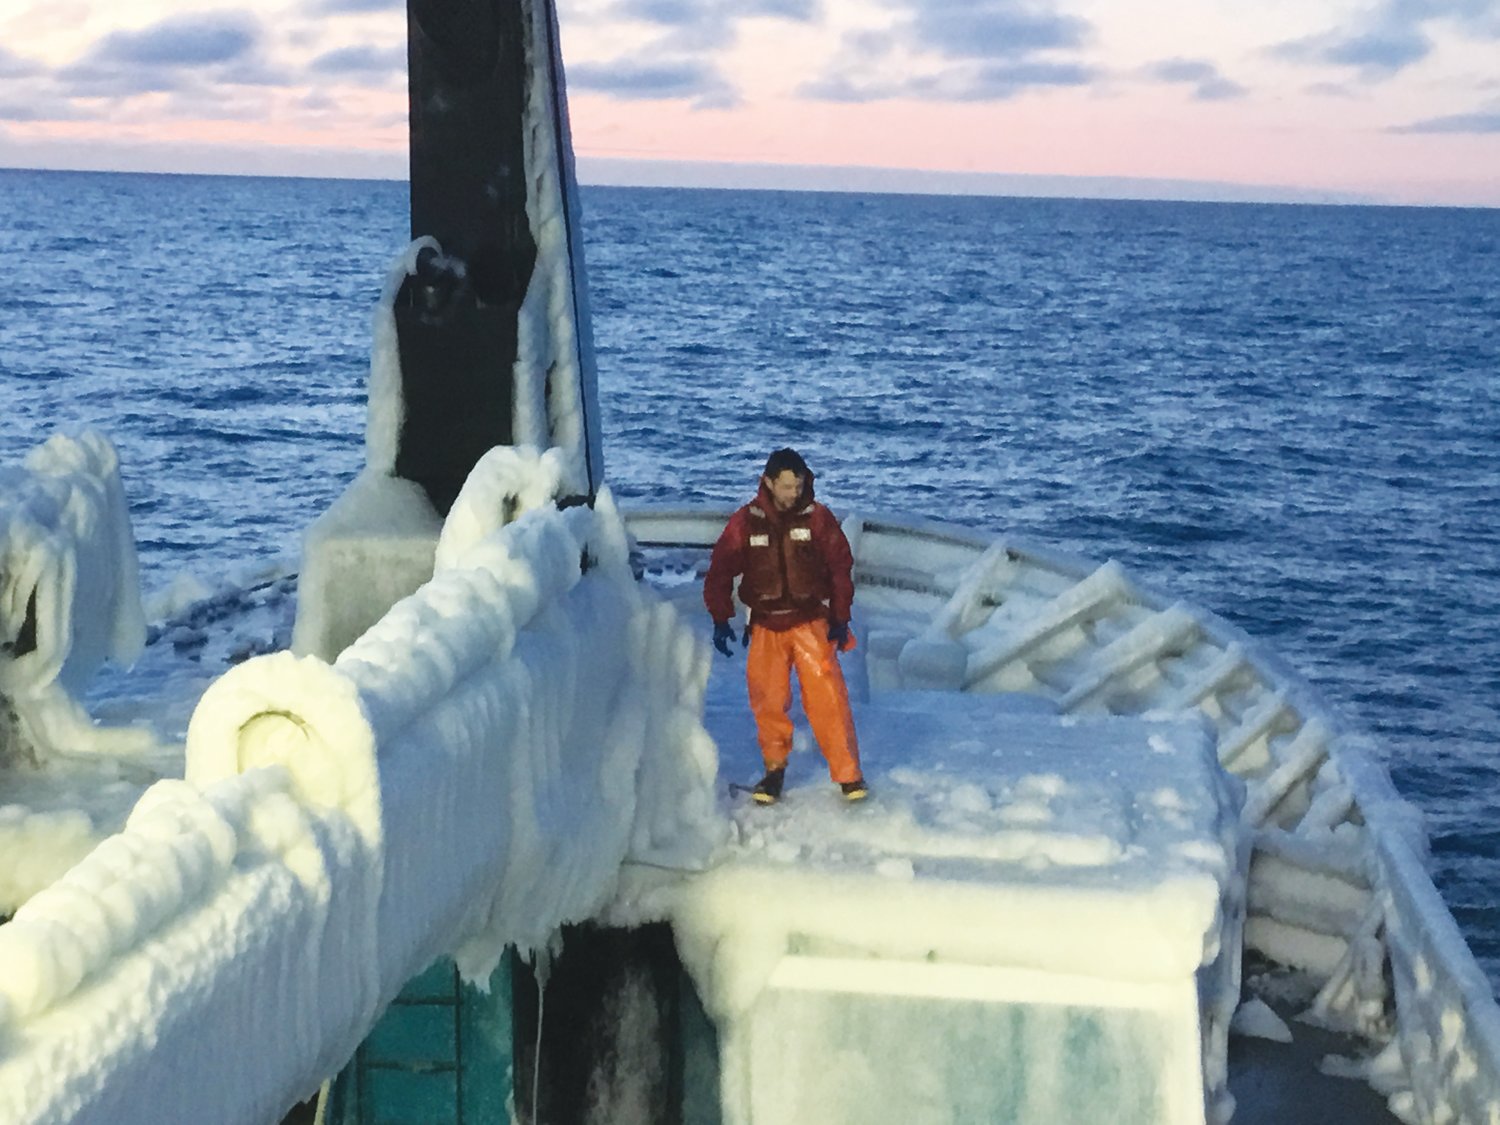 Jim Sjolund on the Bering Sea